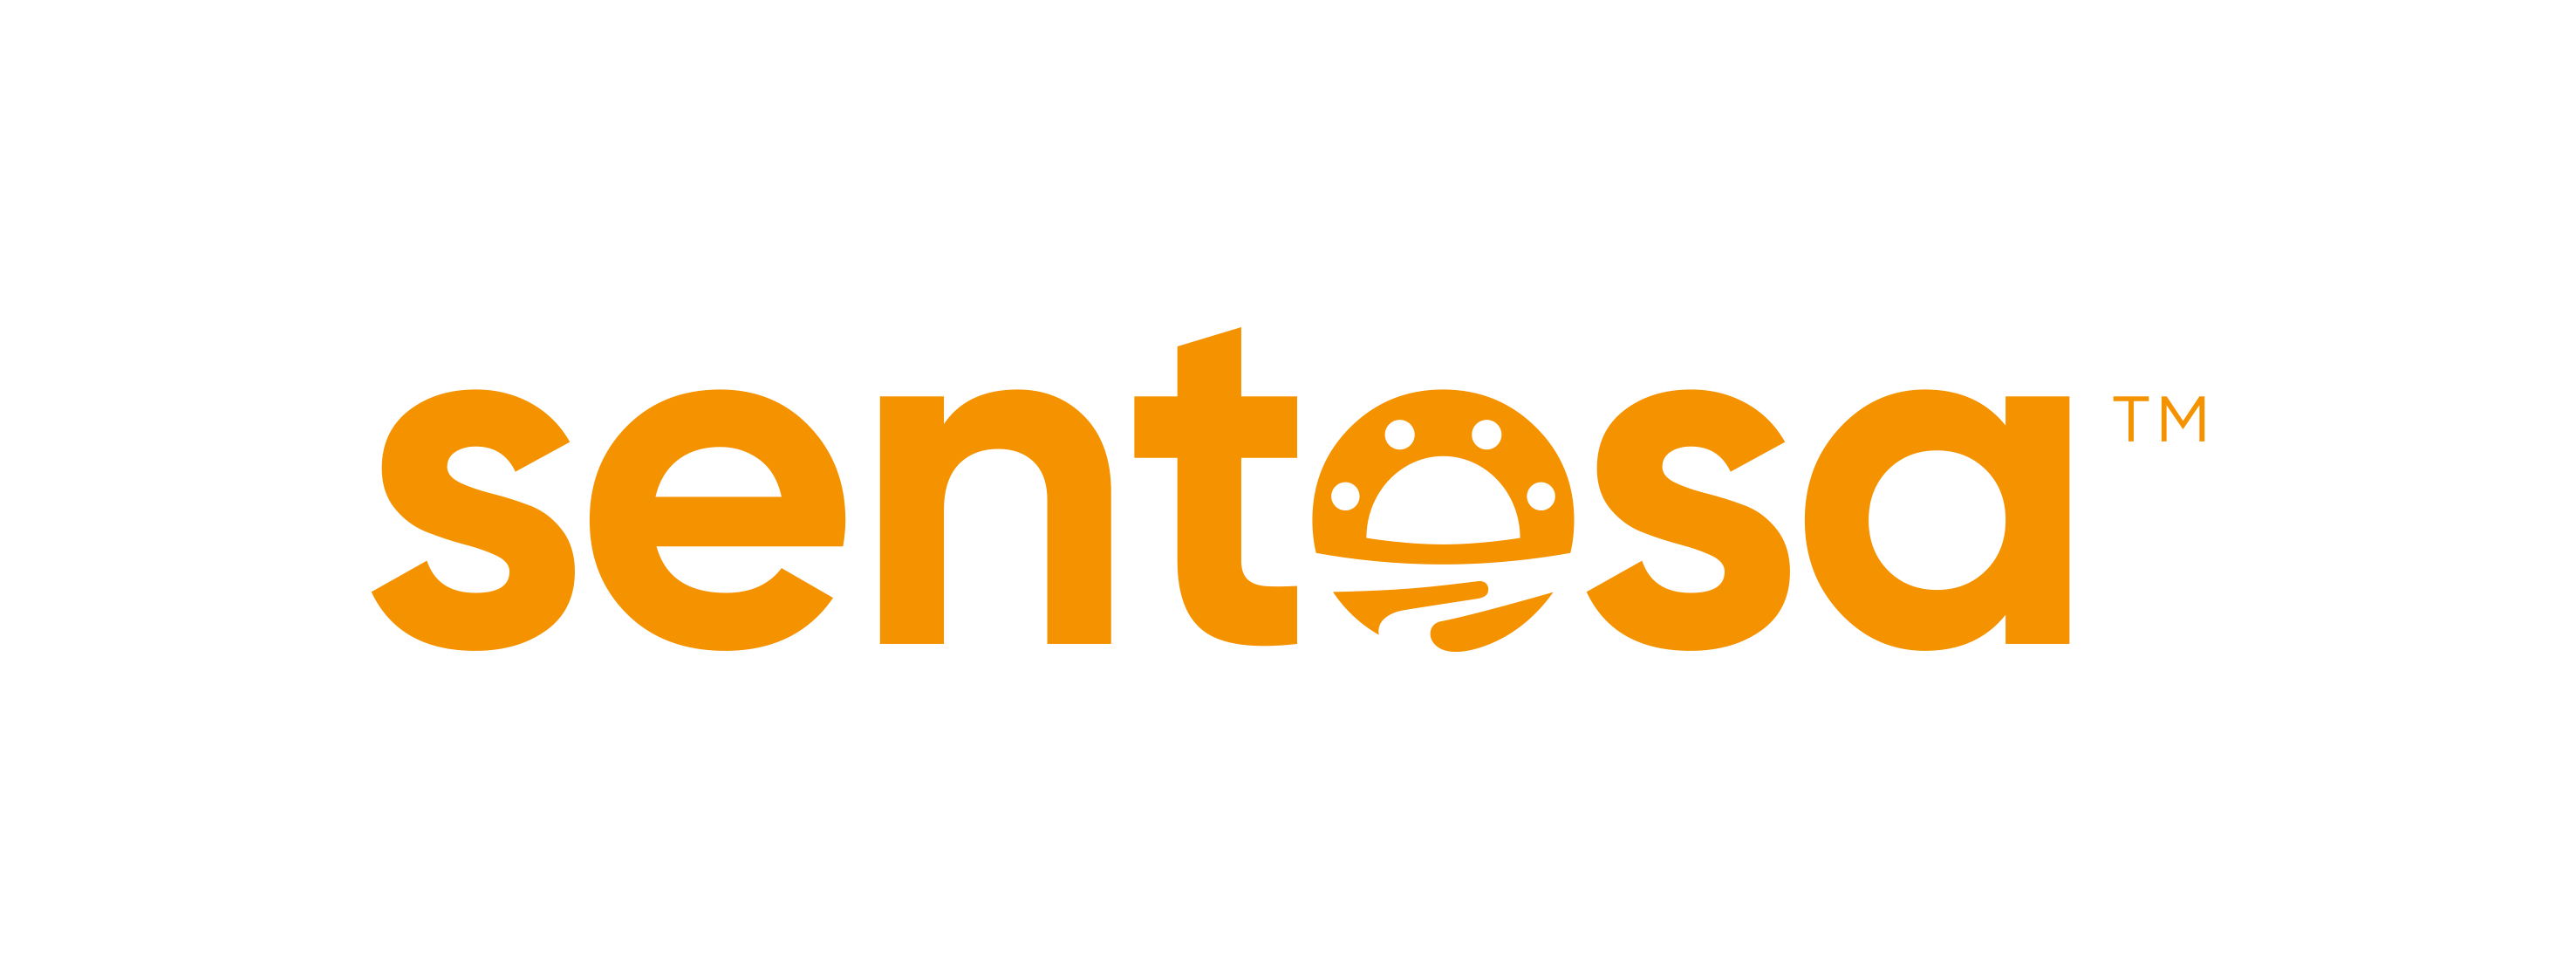 Image of Sentosa logo